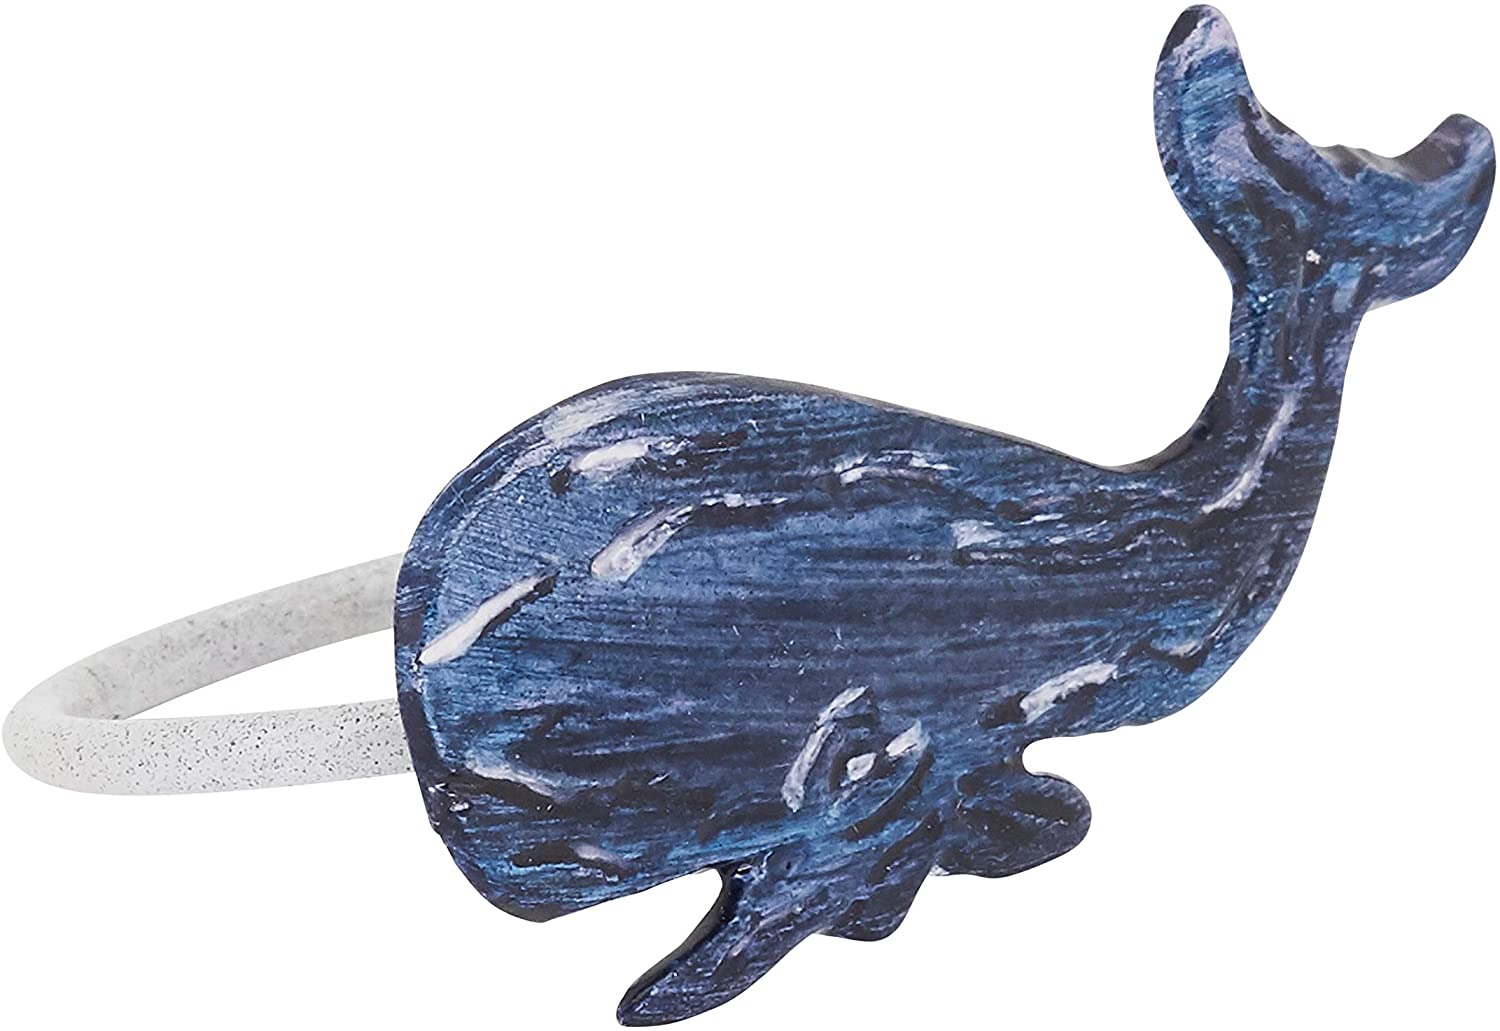 MISC Napkin Rings Whale Design (Set 4) Blue Brass